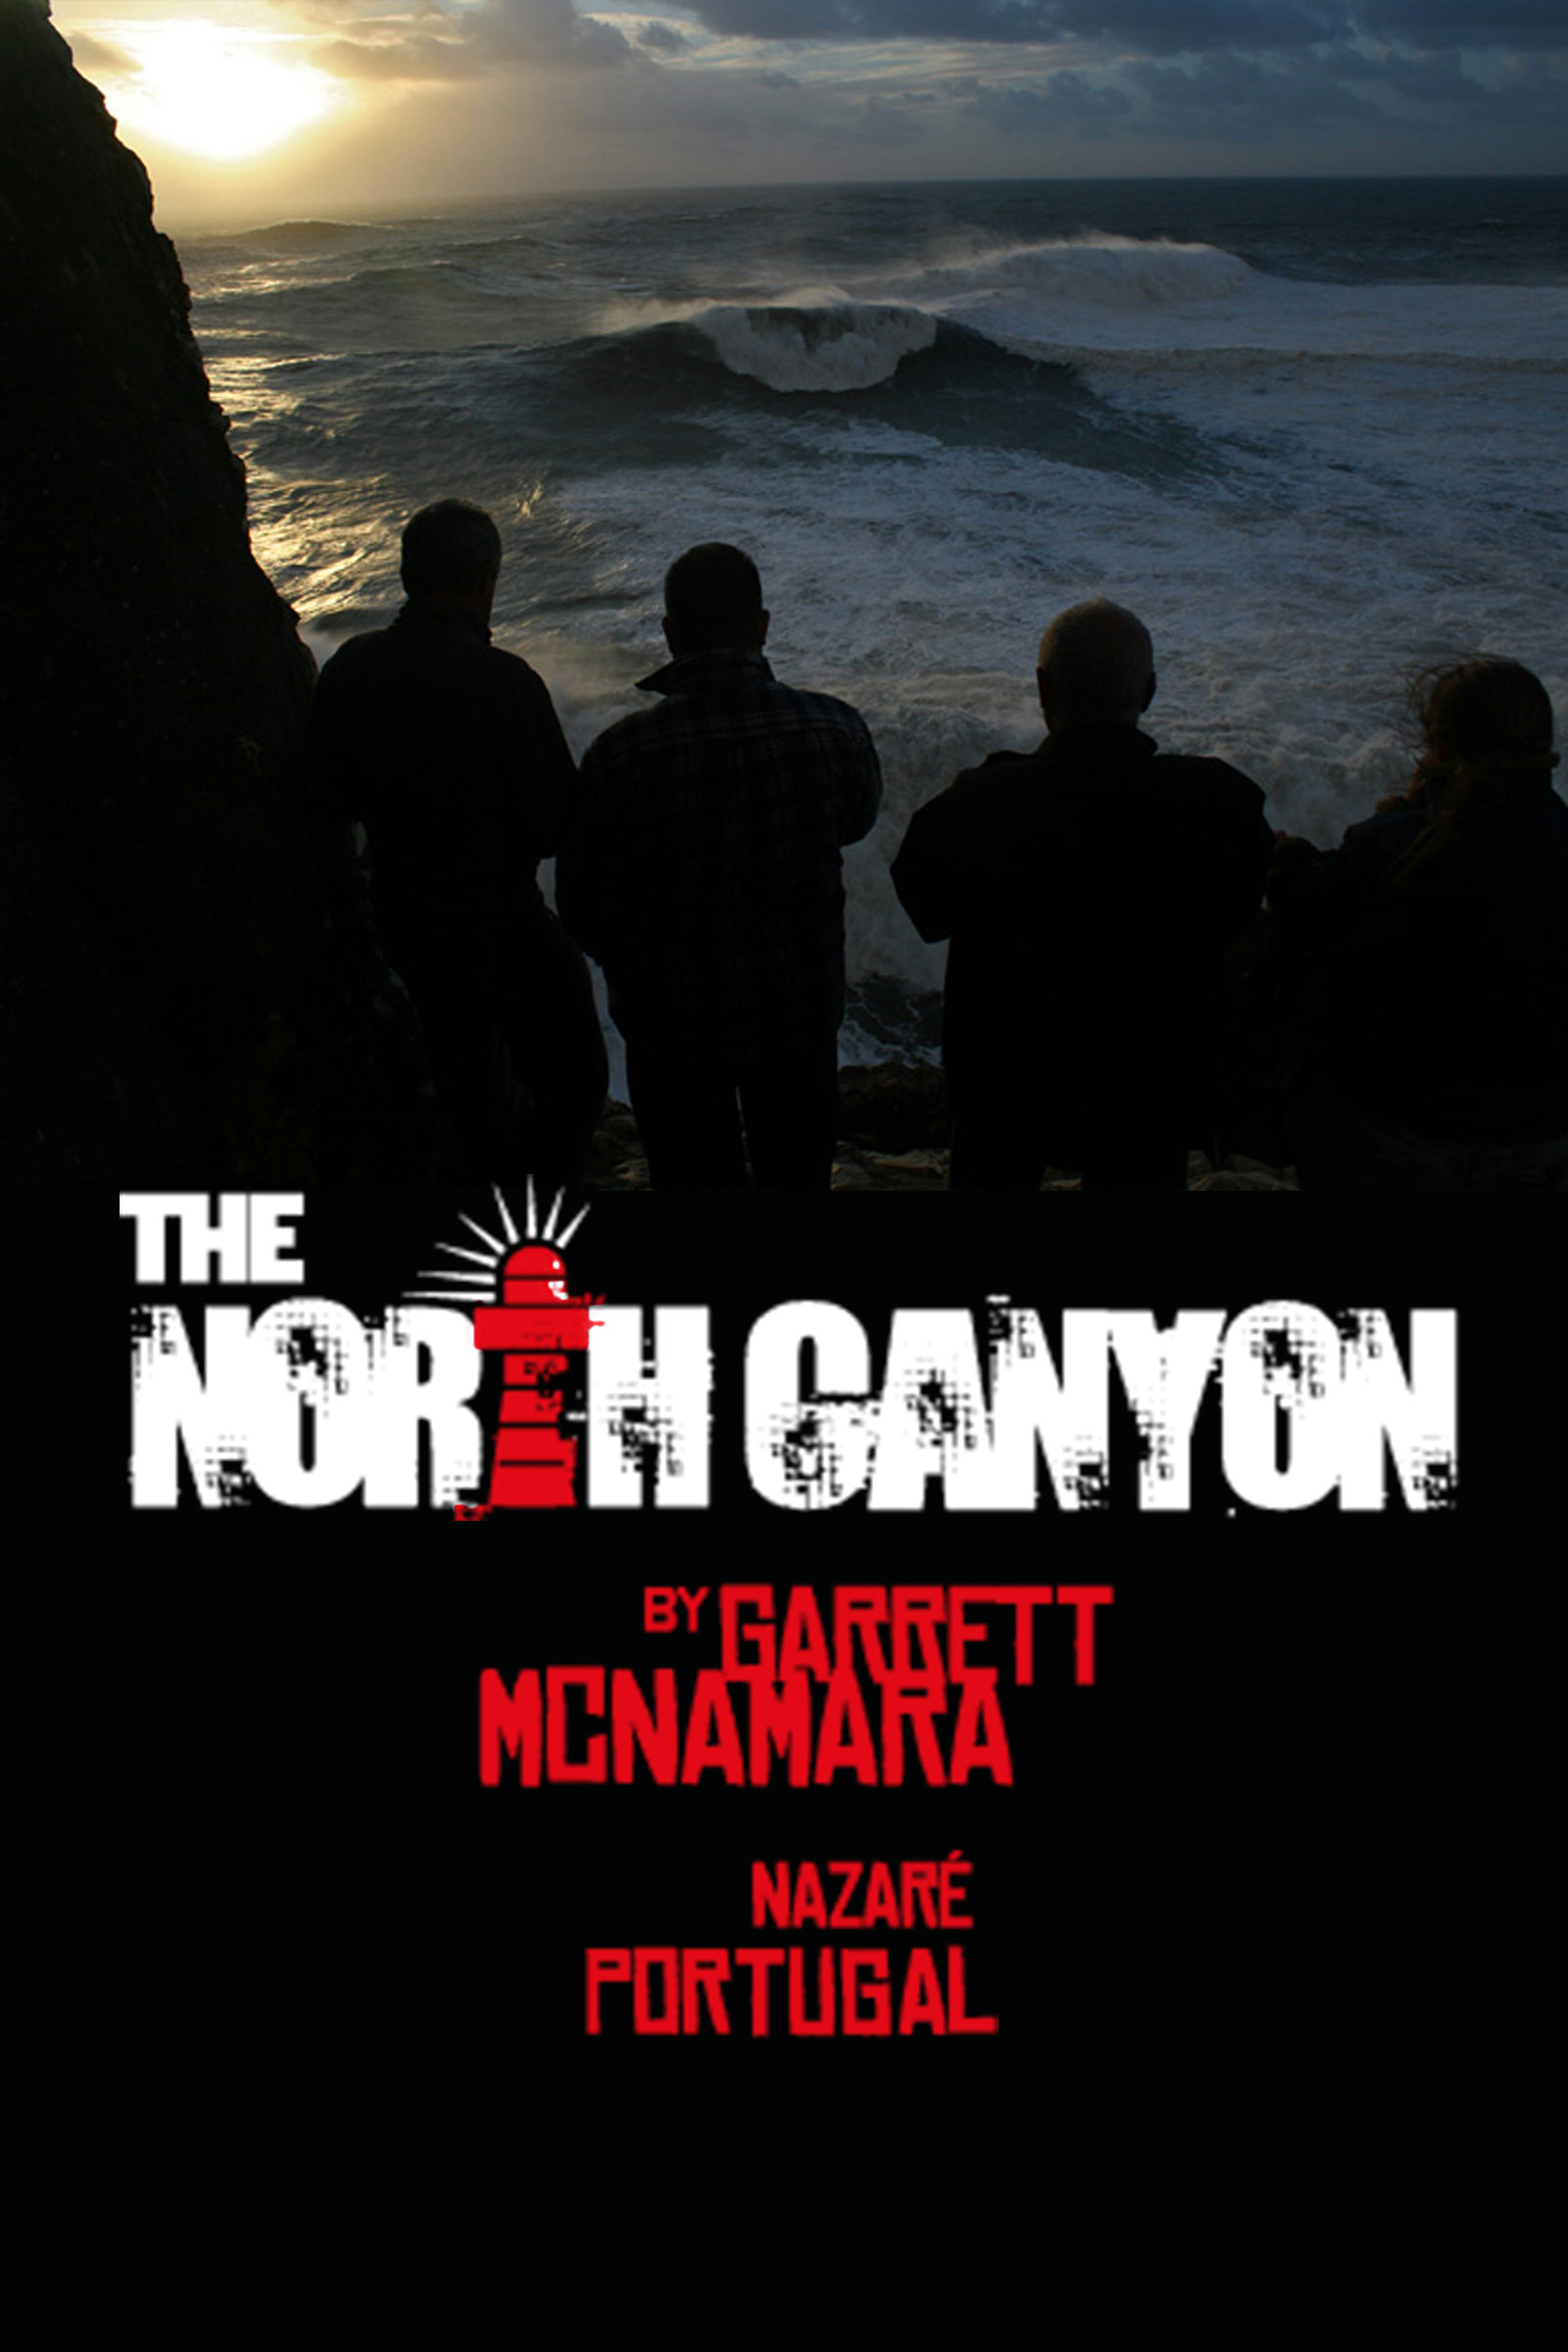 Where to stream The North Canyon: An Exploration By Garrett Mcnamara